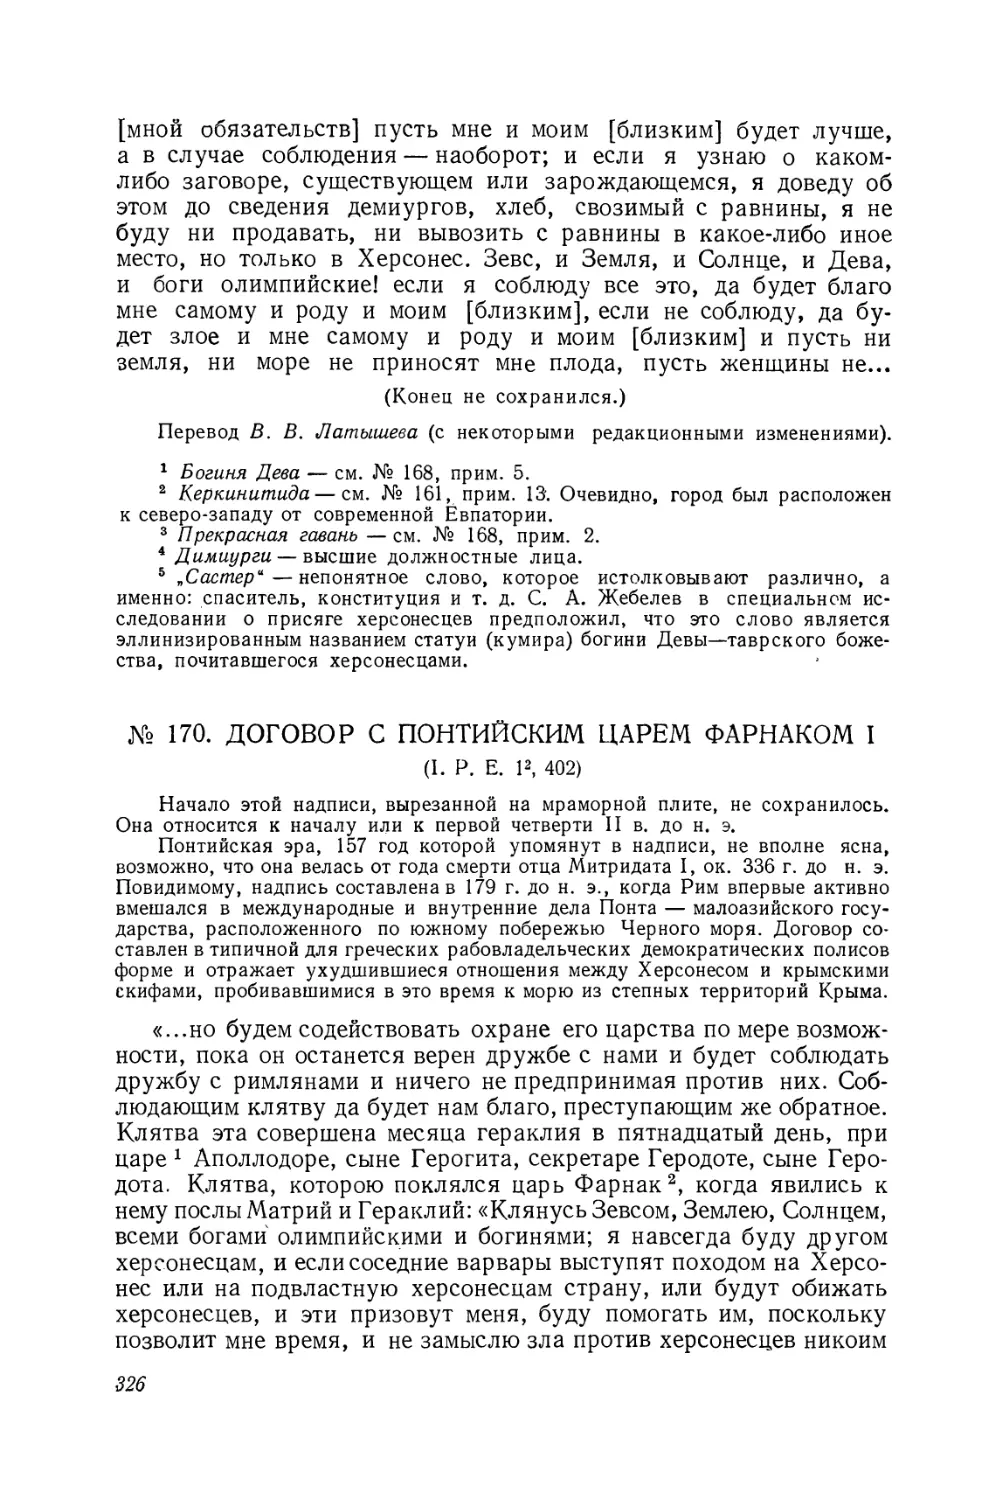 170. Договор с понтийским царем Фарнаком (надпись).